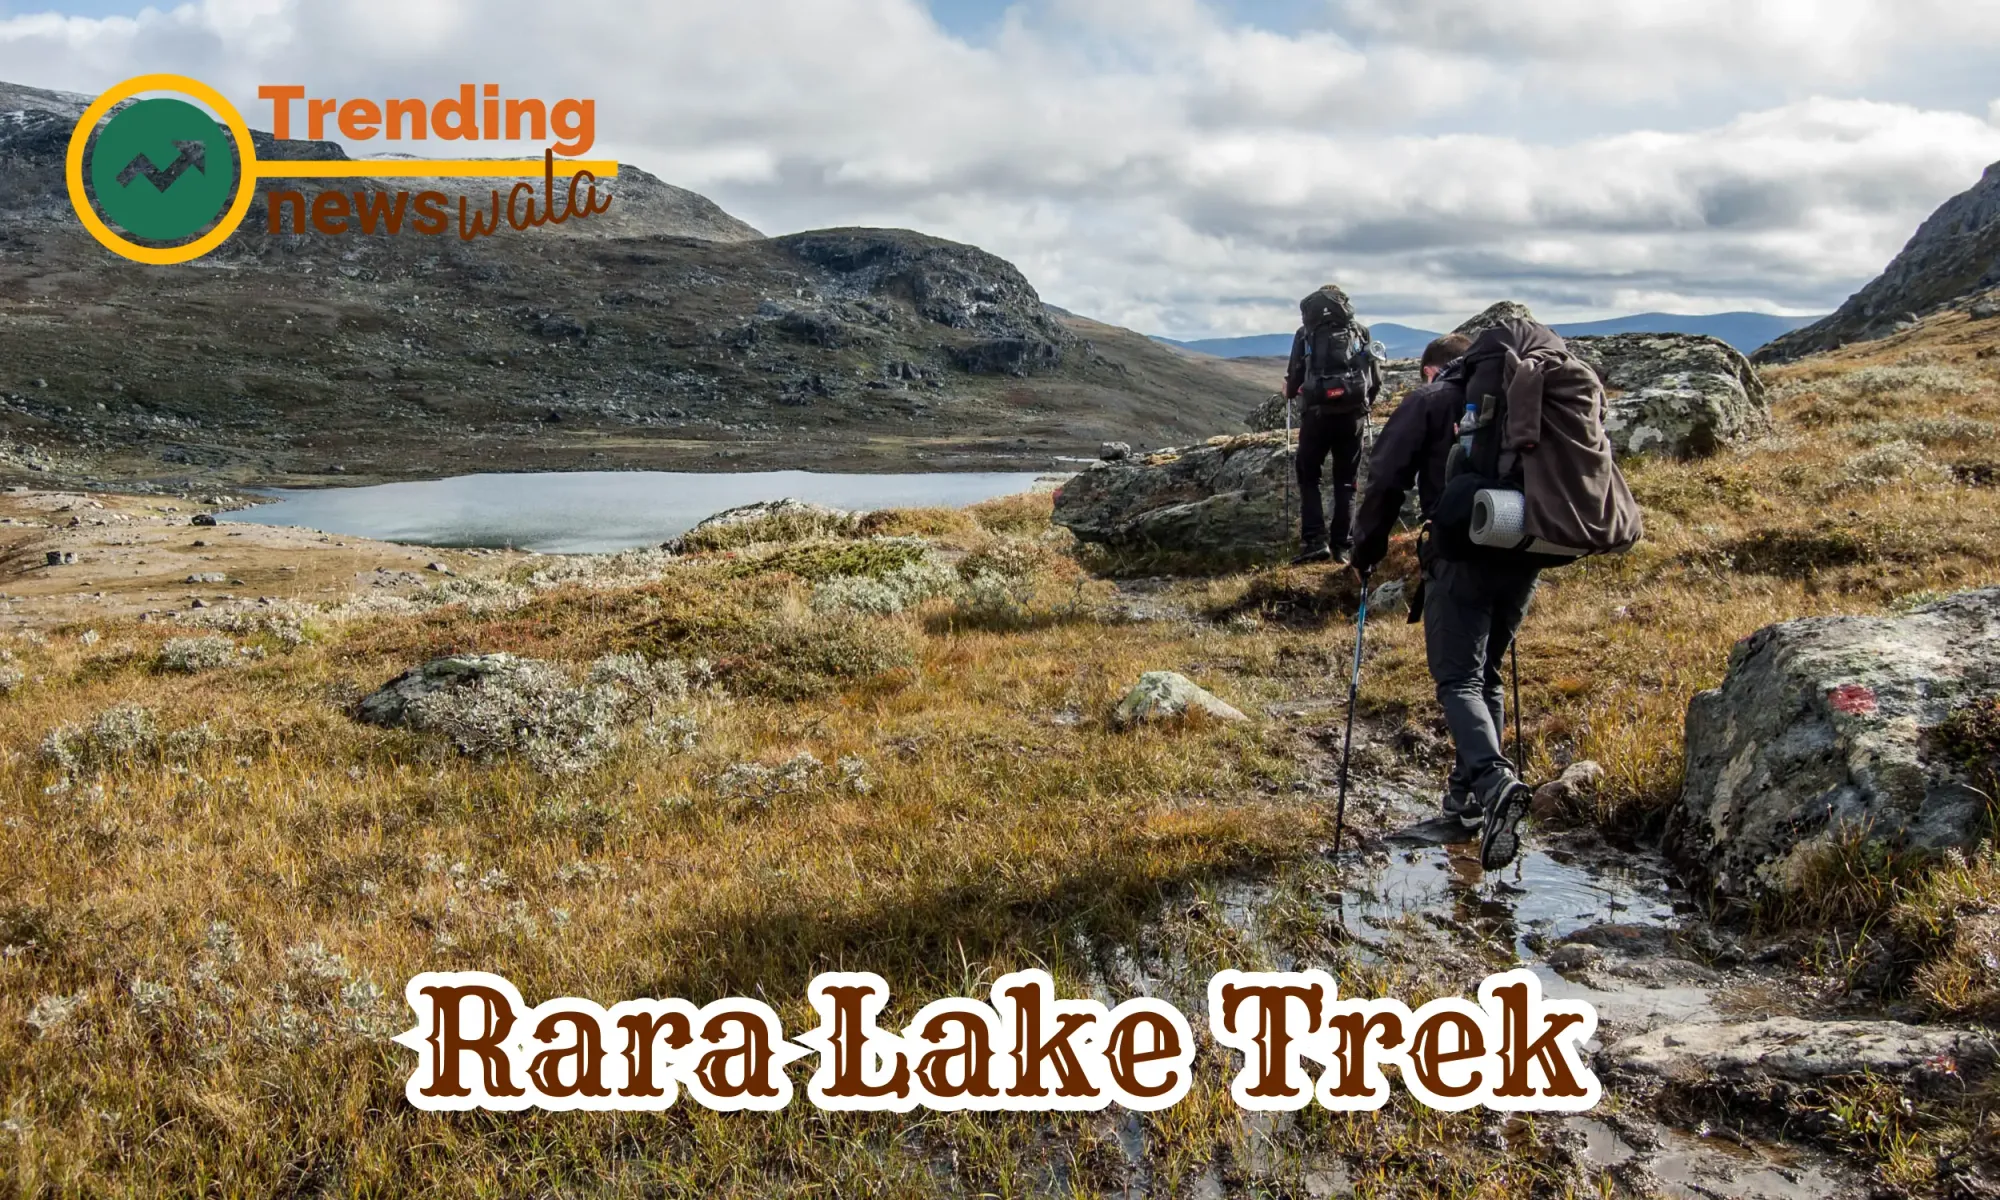 The Rara Lake Trek is an off-the-beaten-path adventure in the remote northwest region of Nepal